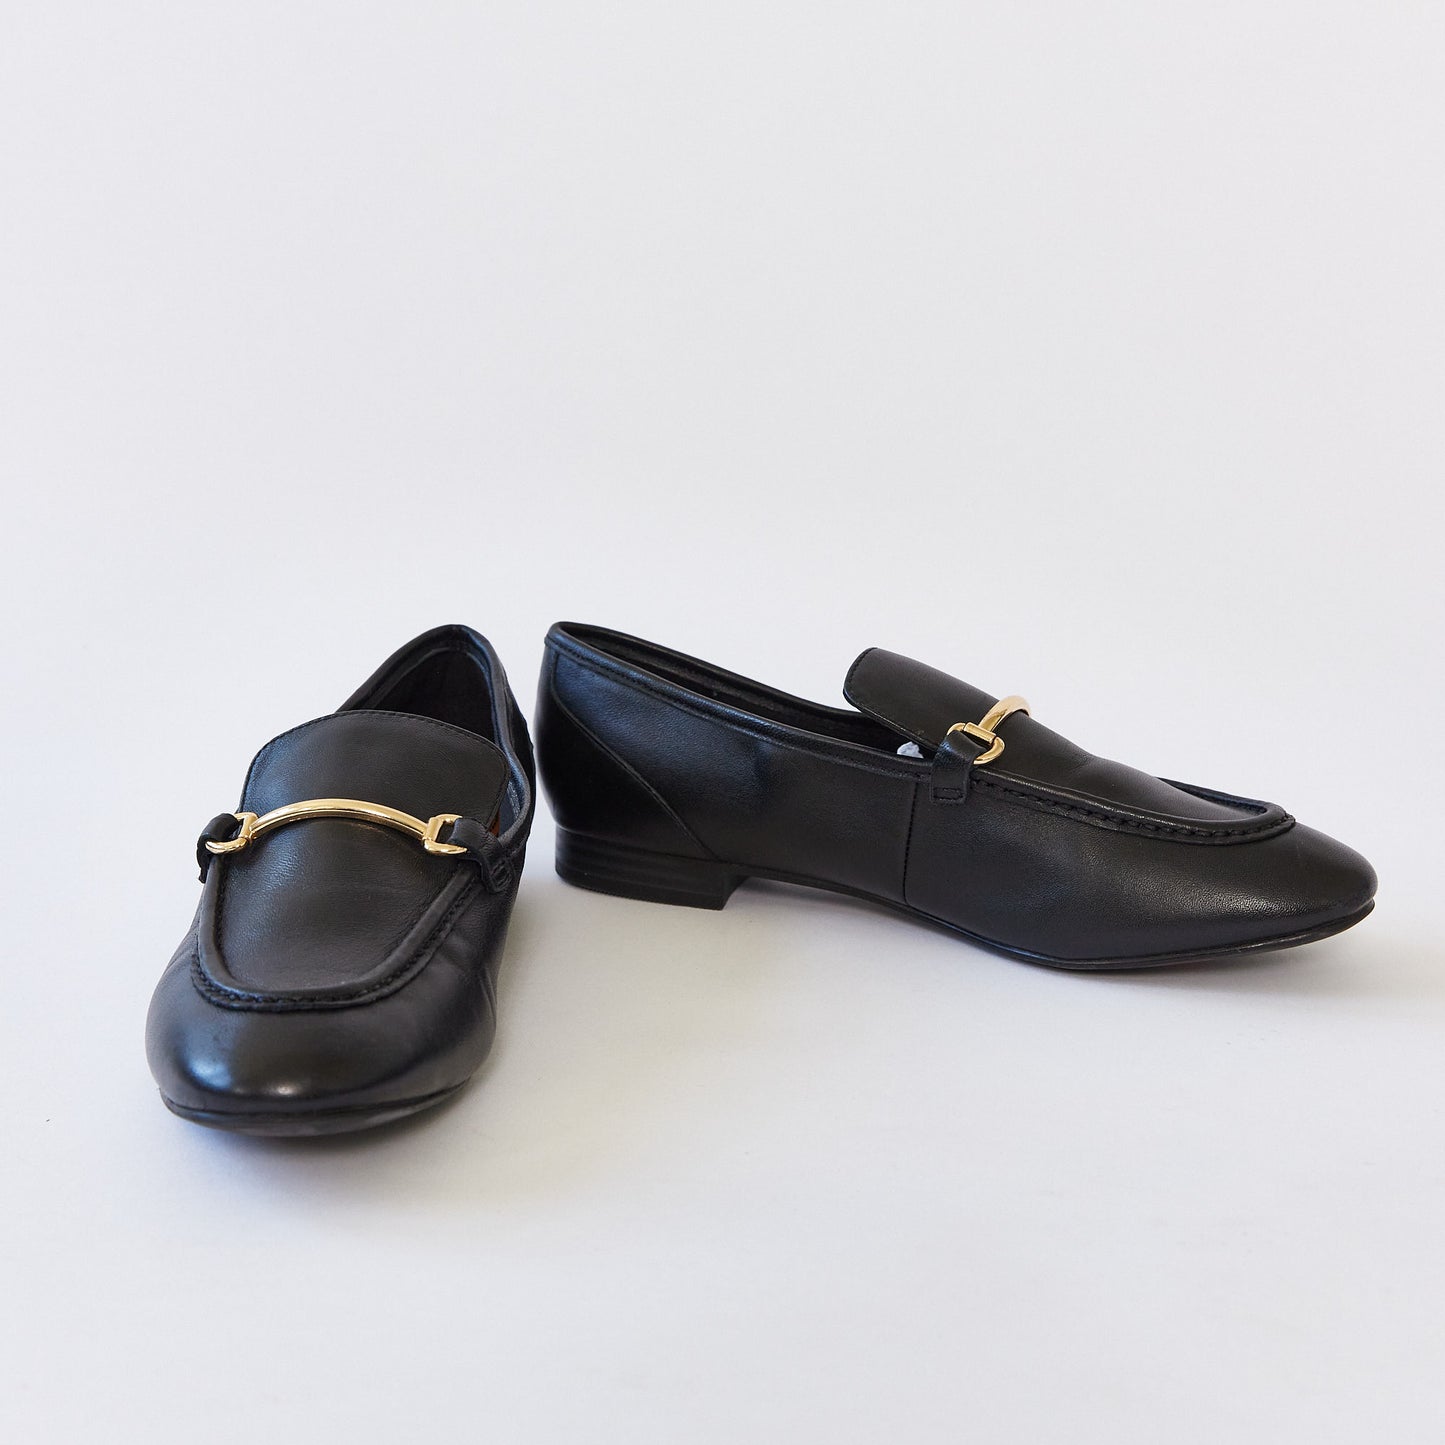 Black loafer style shoe size 7